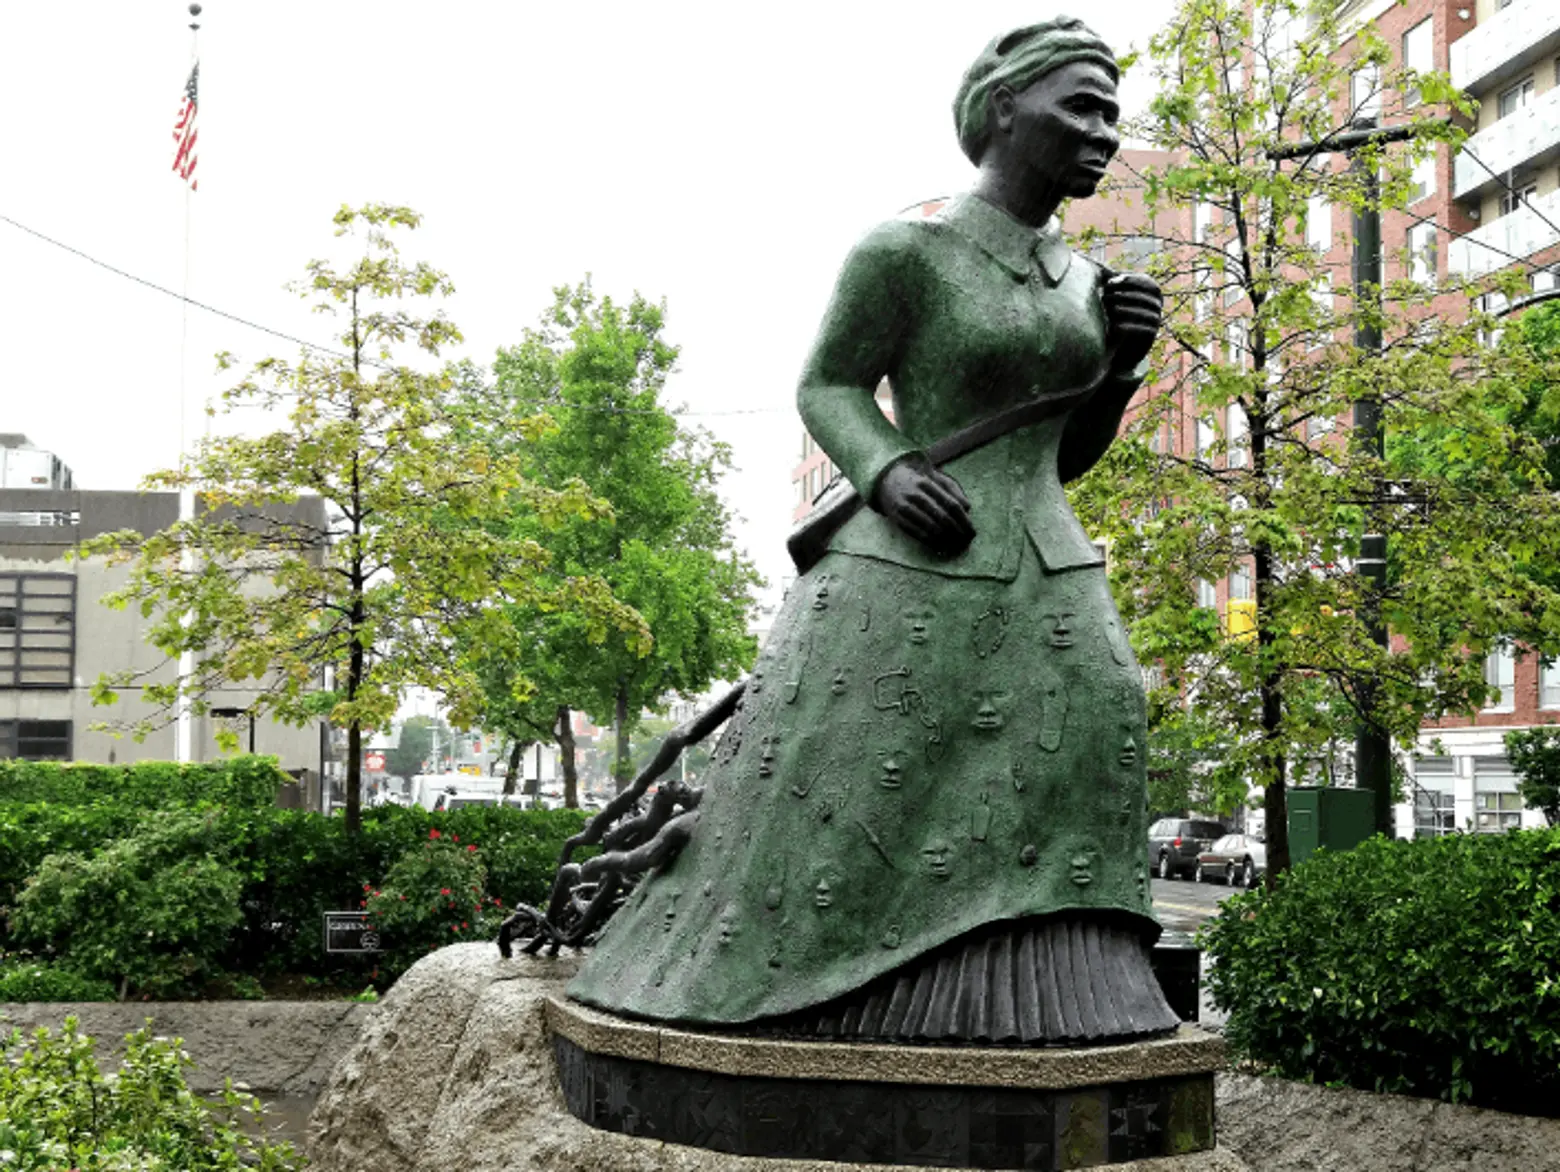 The story behind Harlem's trailblazing Harriet Tubman sculpture